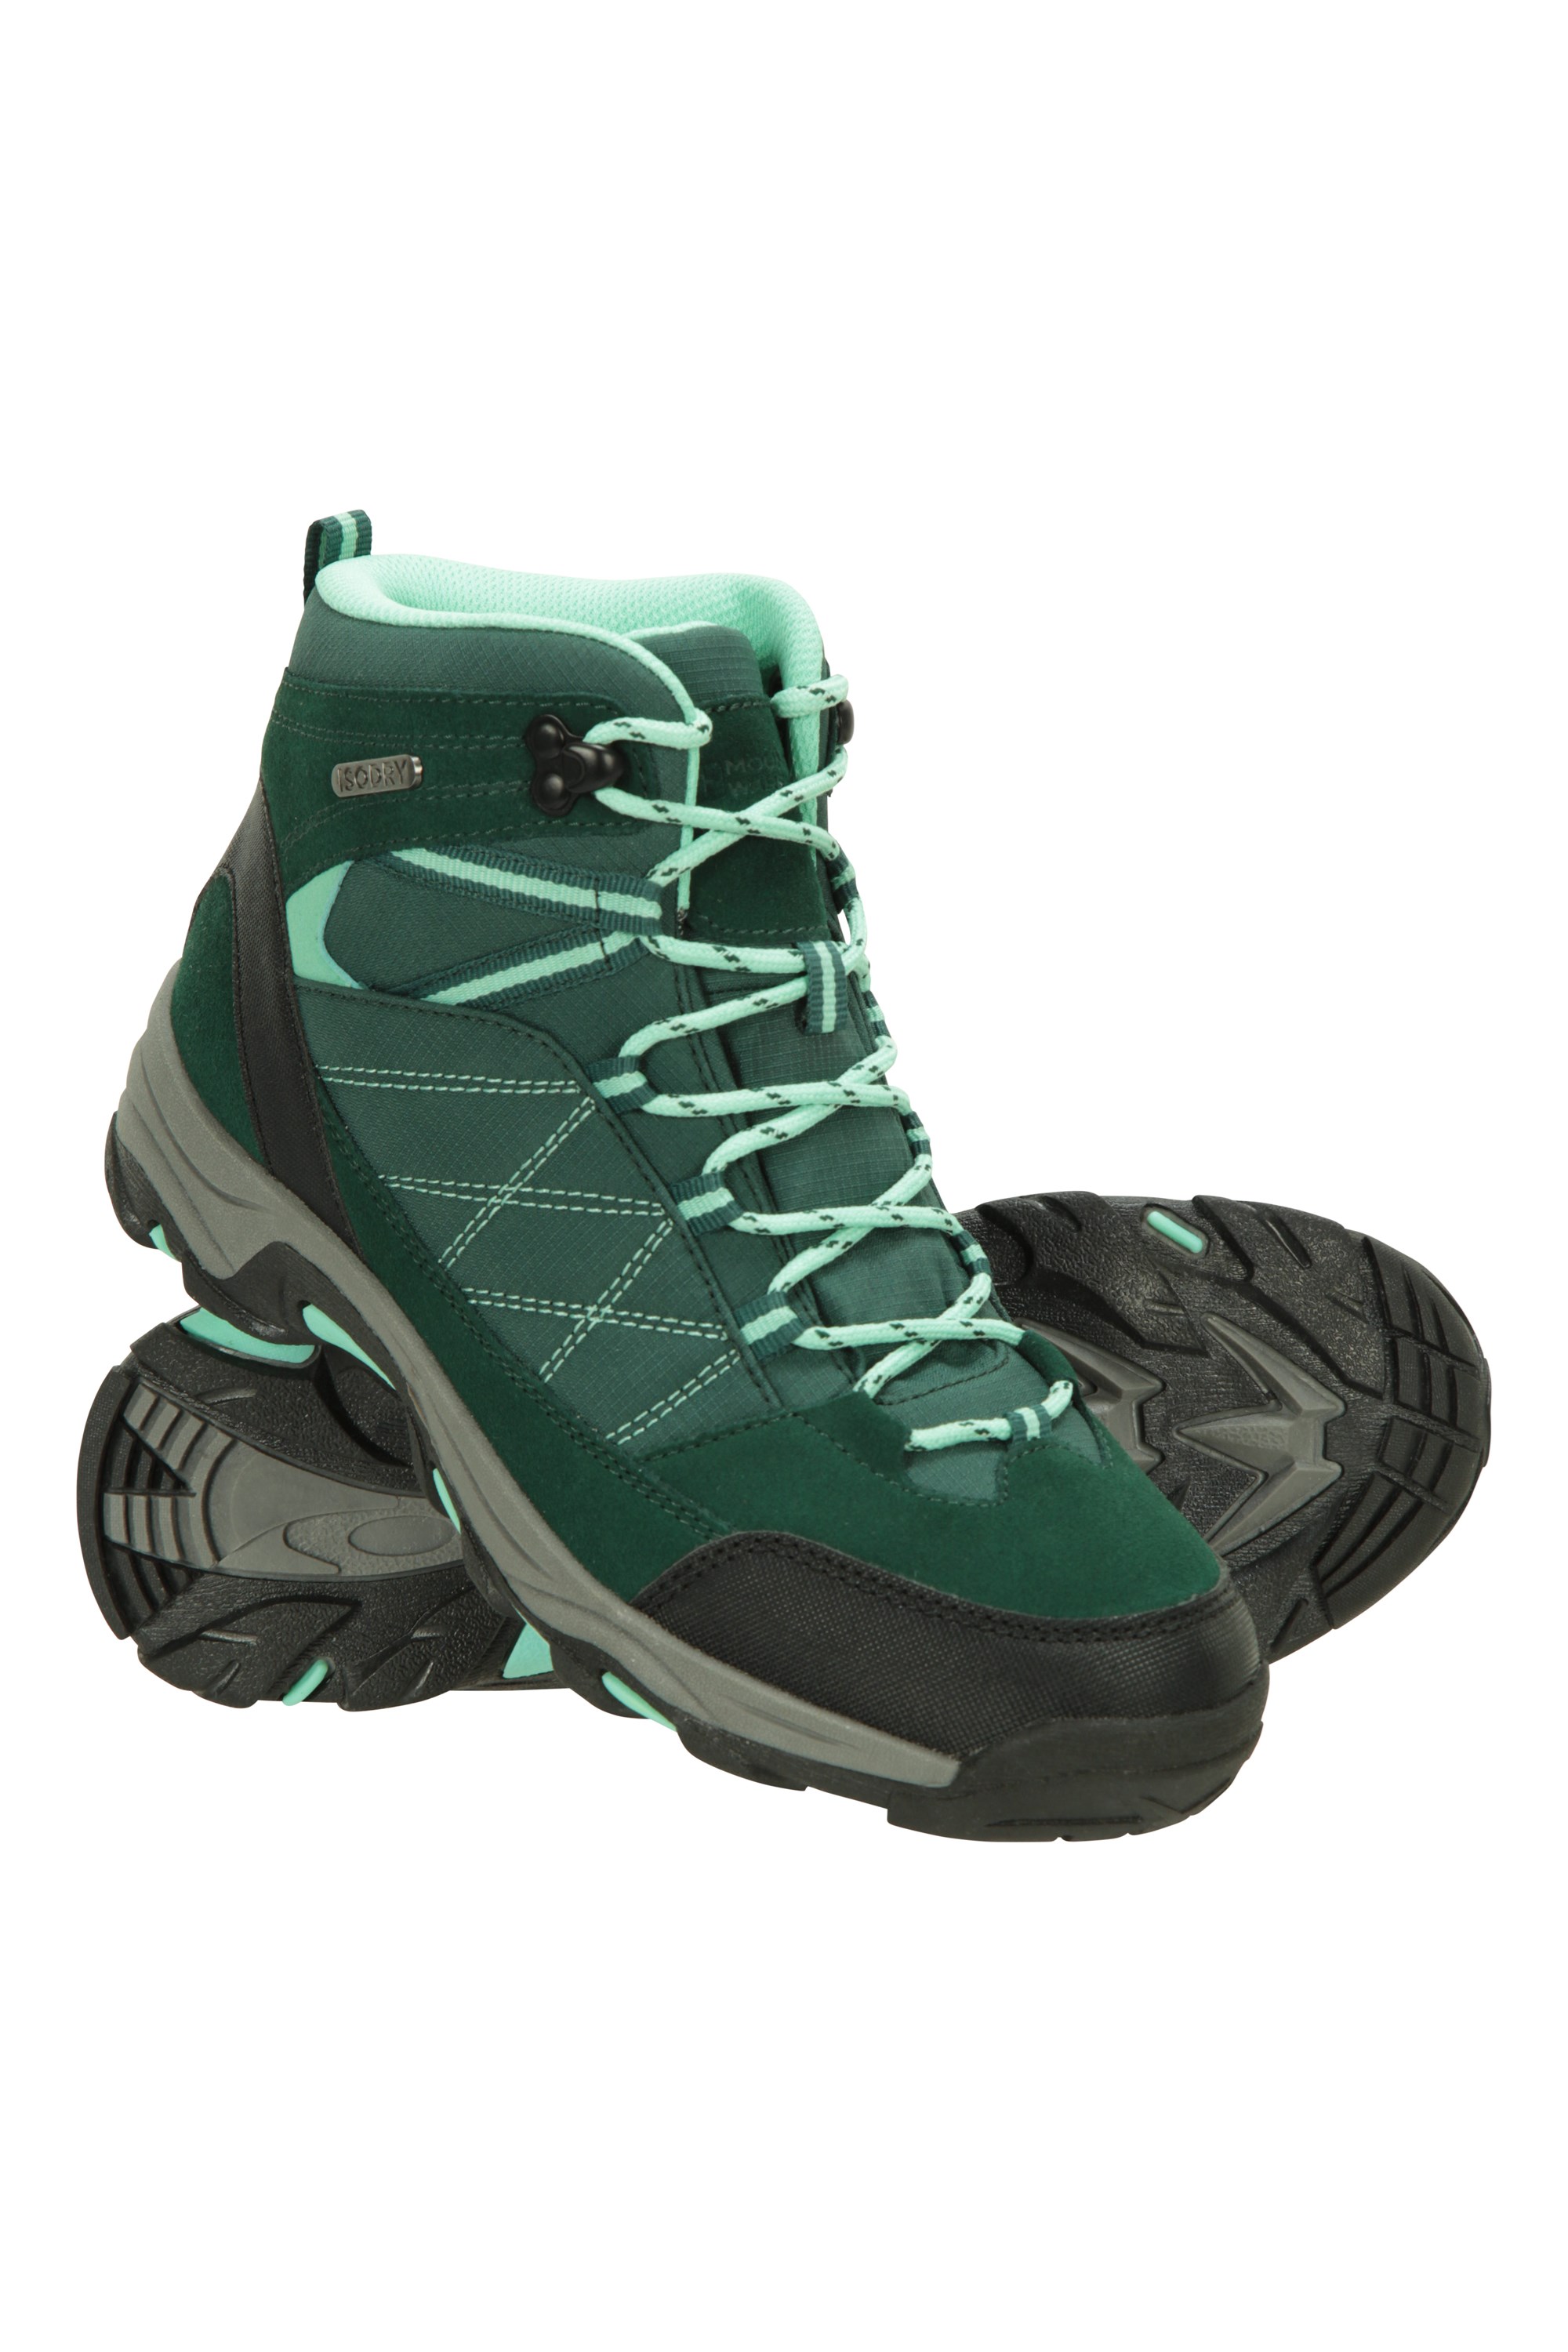 Rapid Womens Waterproof Hiking Boots - Green